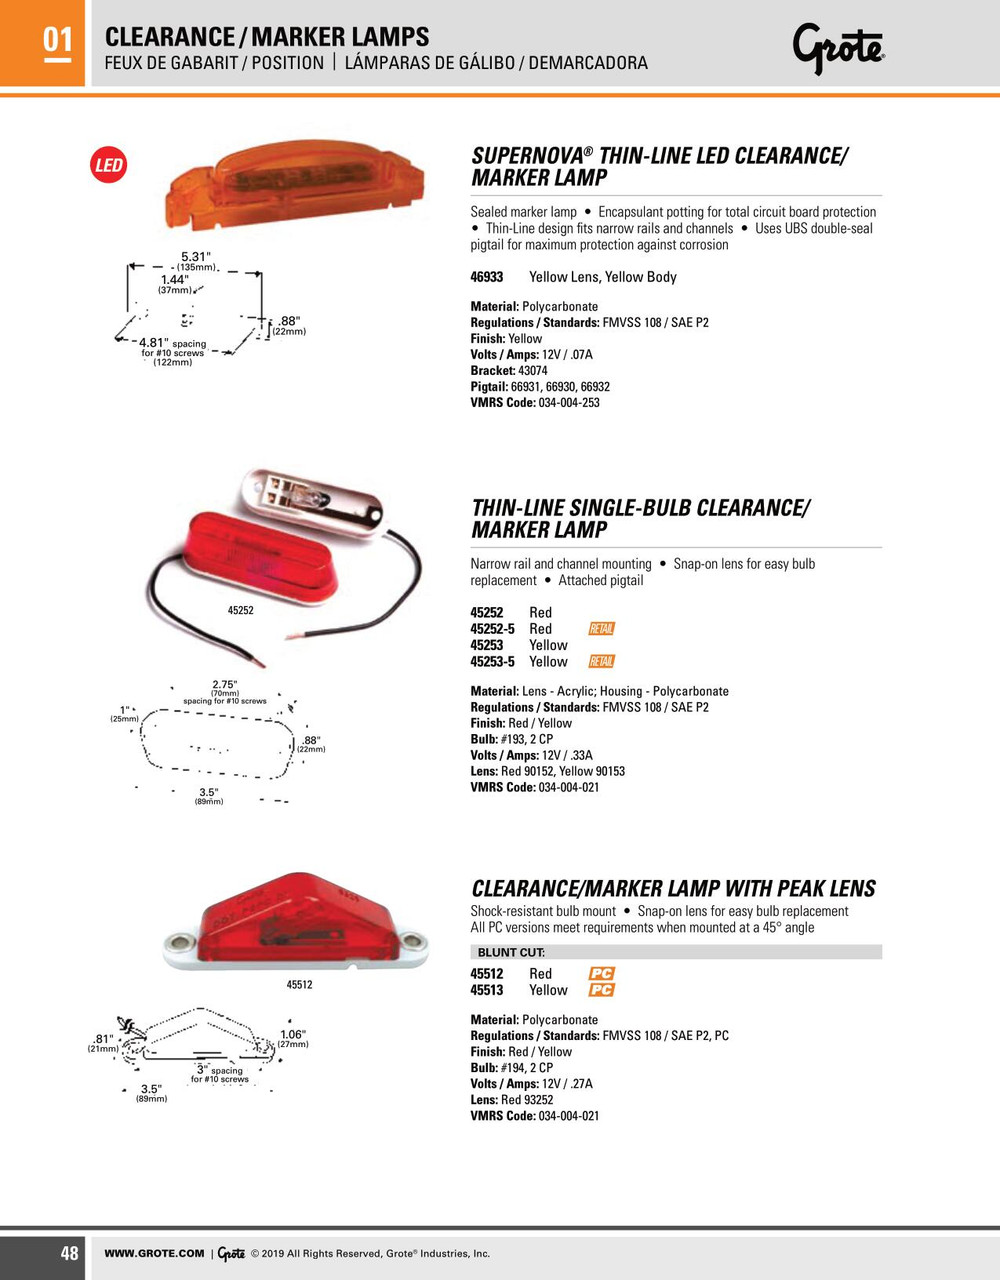 Peak Lens Clearance/Marker Lamp w/Blunt Cut Wire - Red  45512